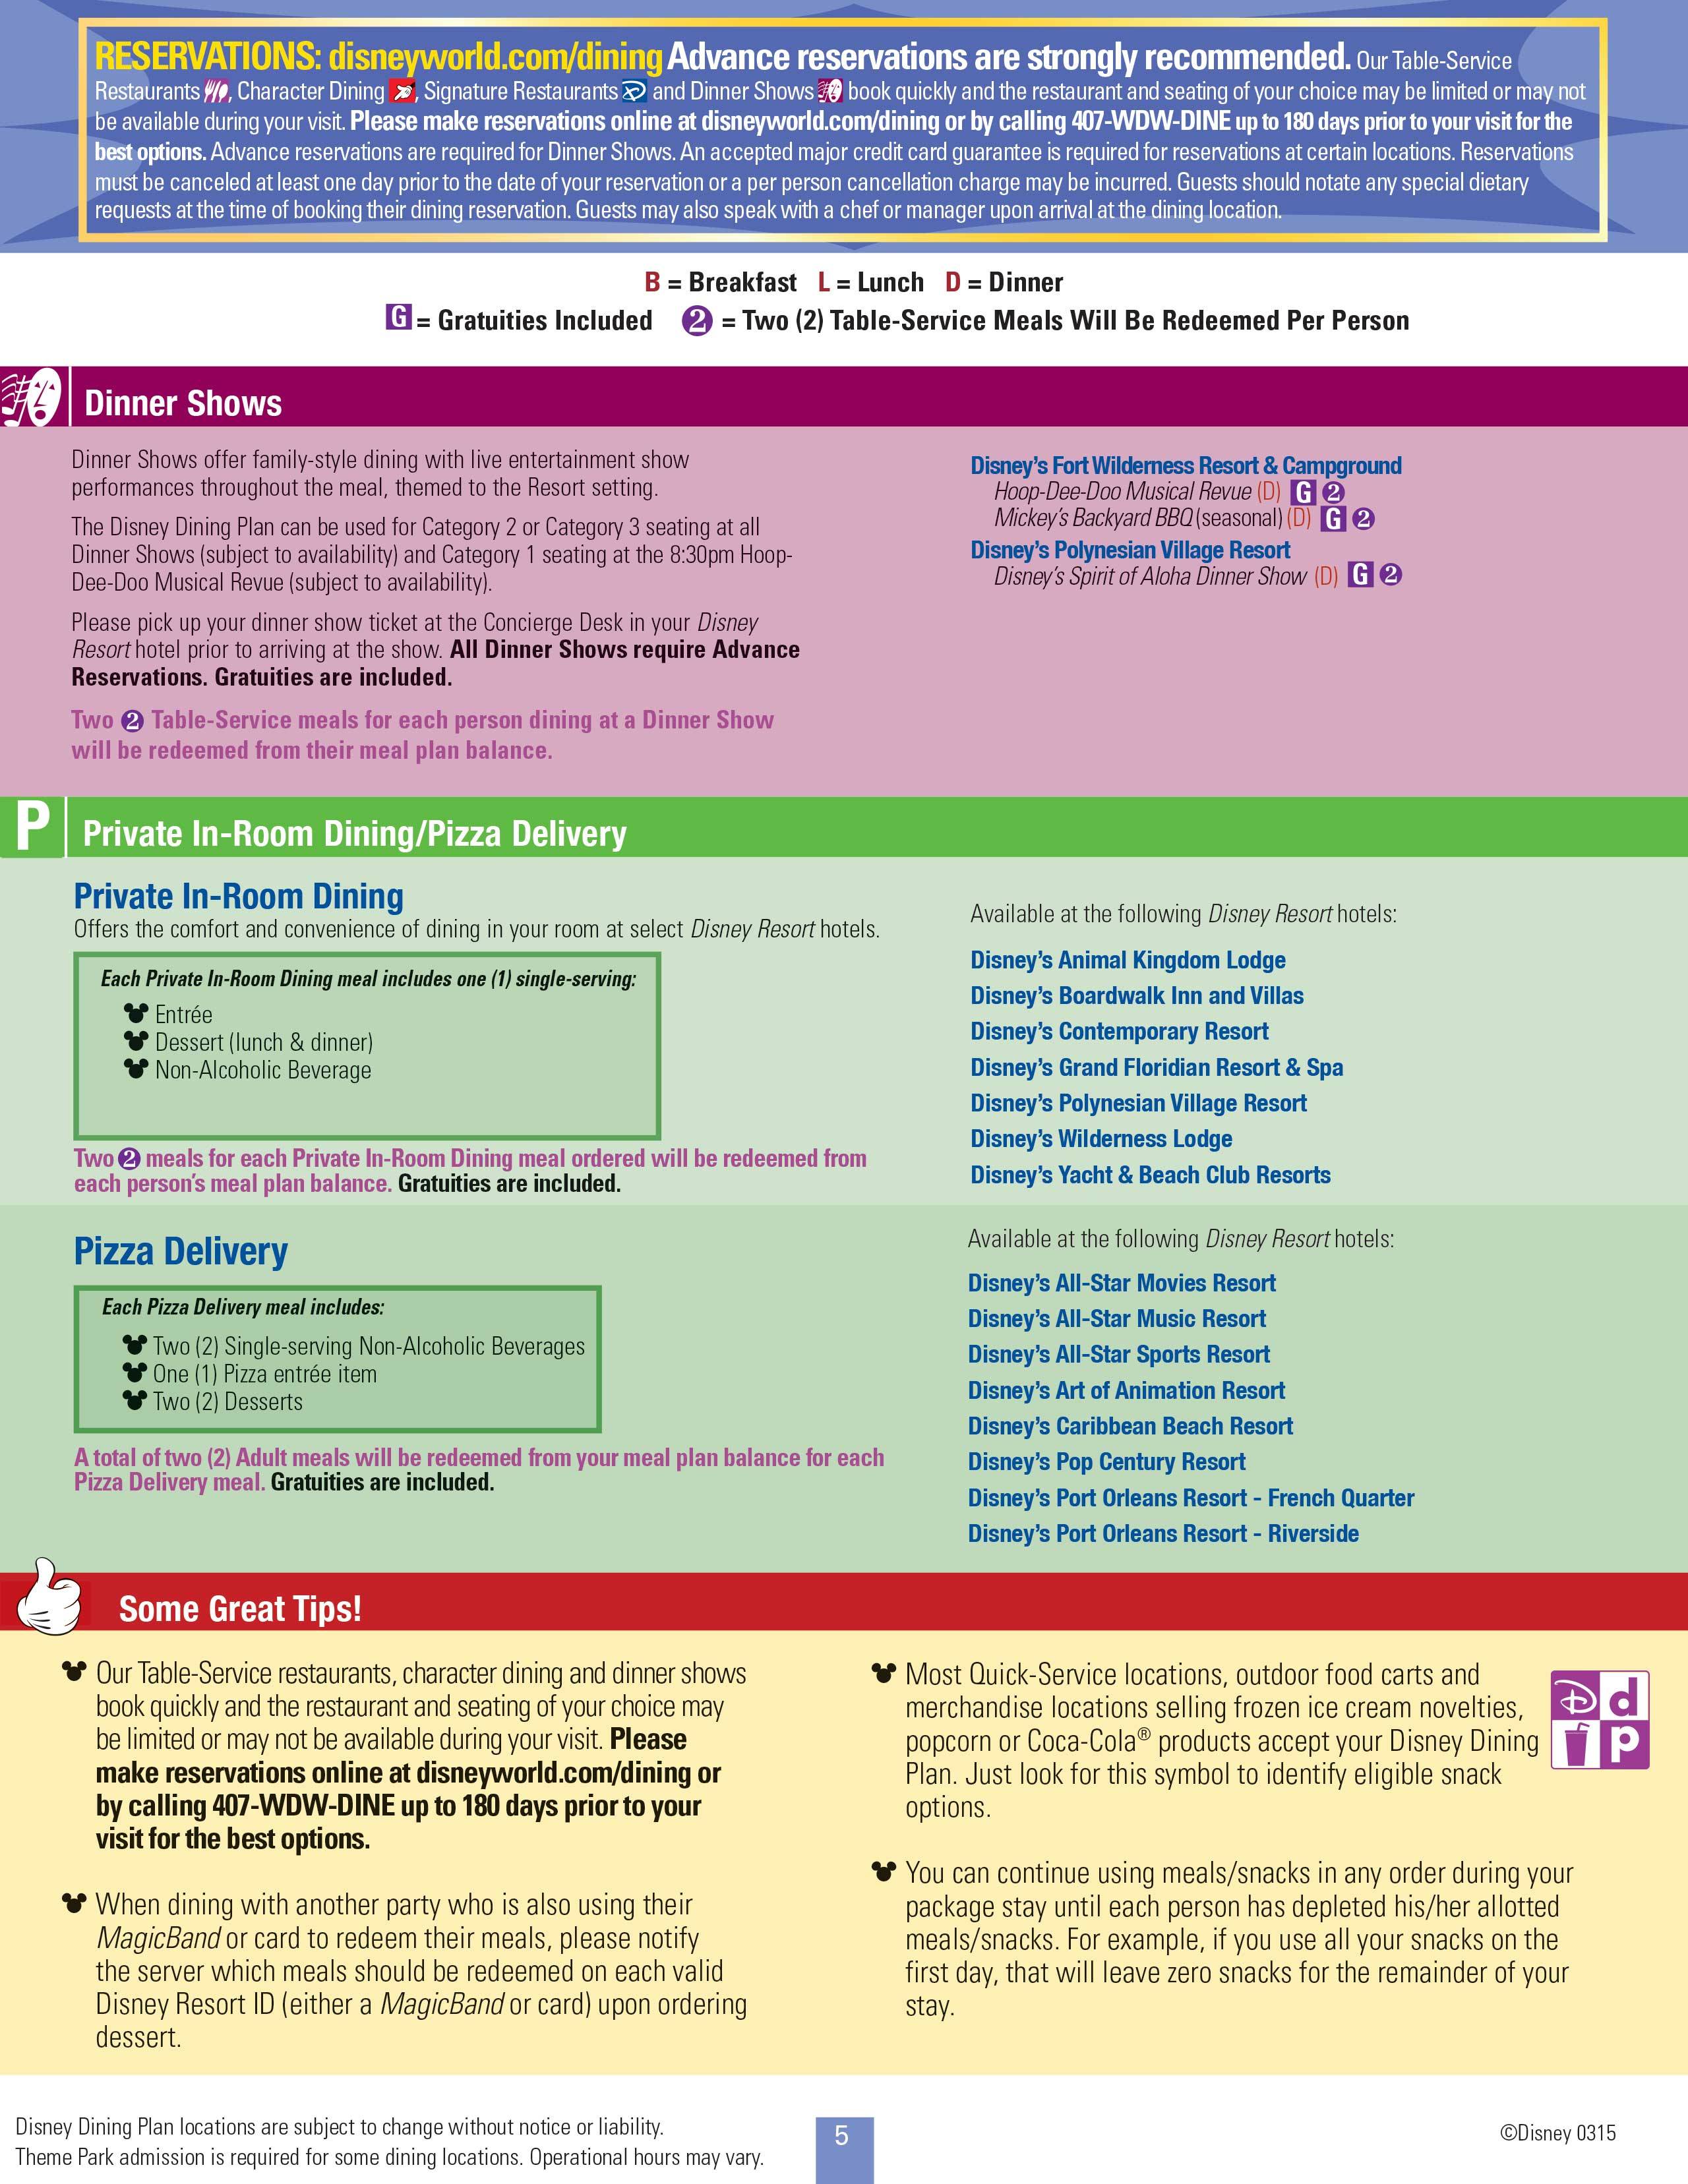 2015 Disney Dining Plan brochure - Page 5